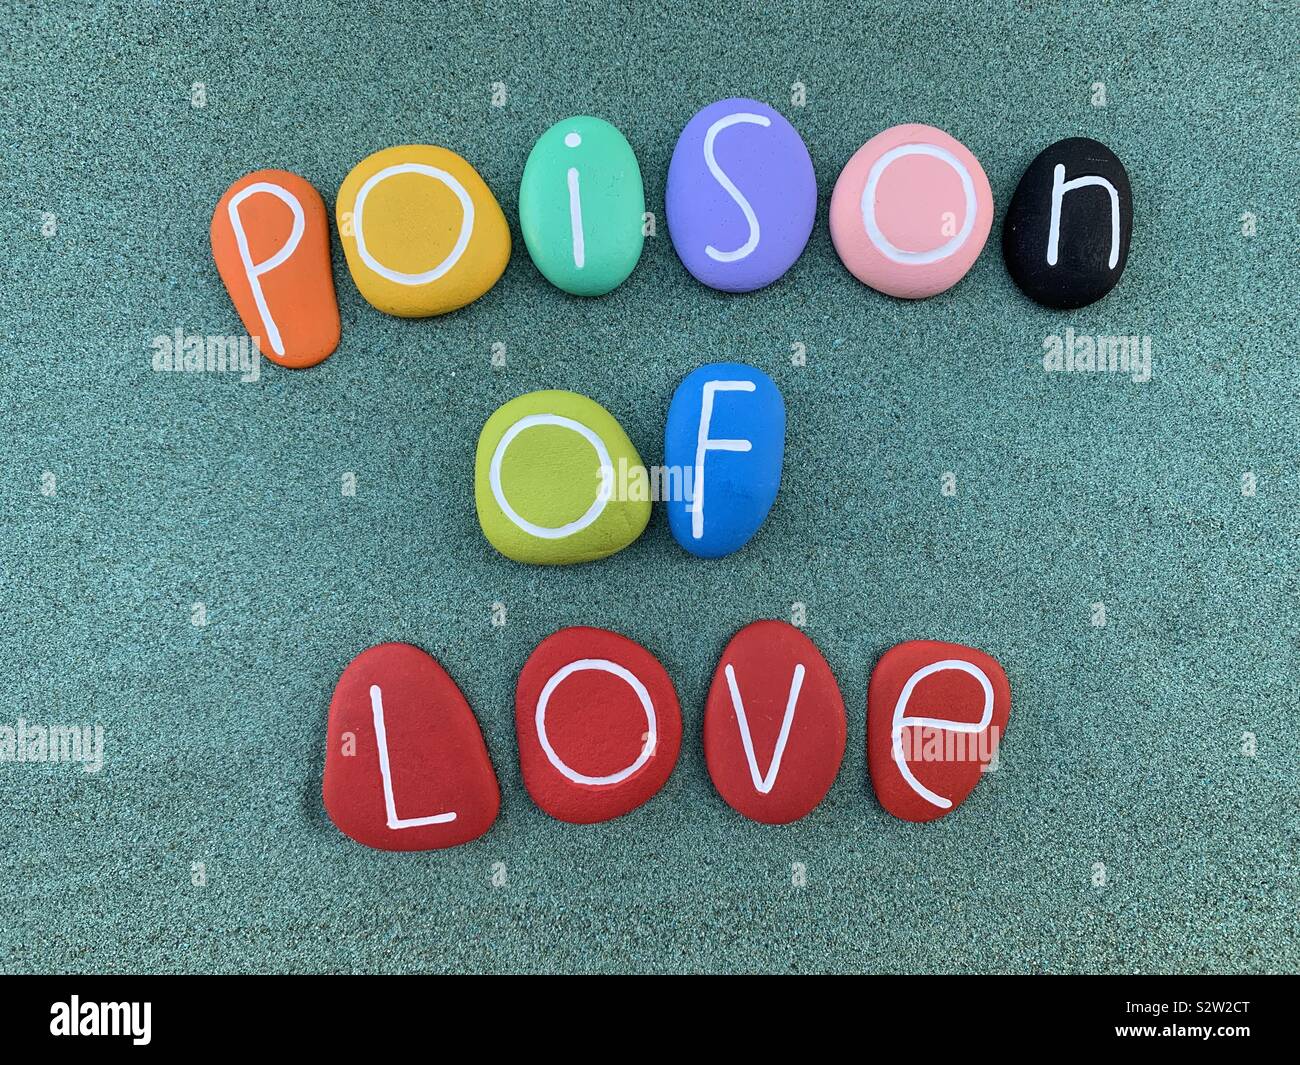 Poison of love Stock Photo